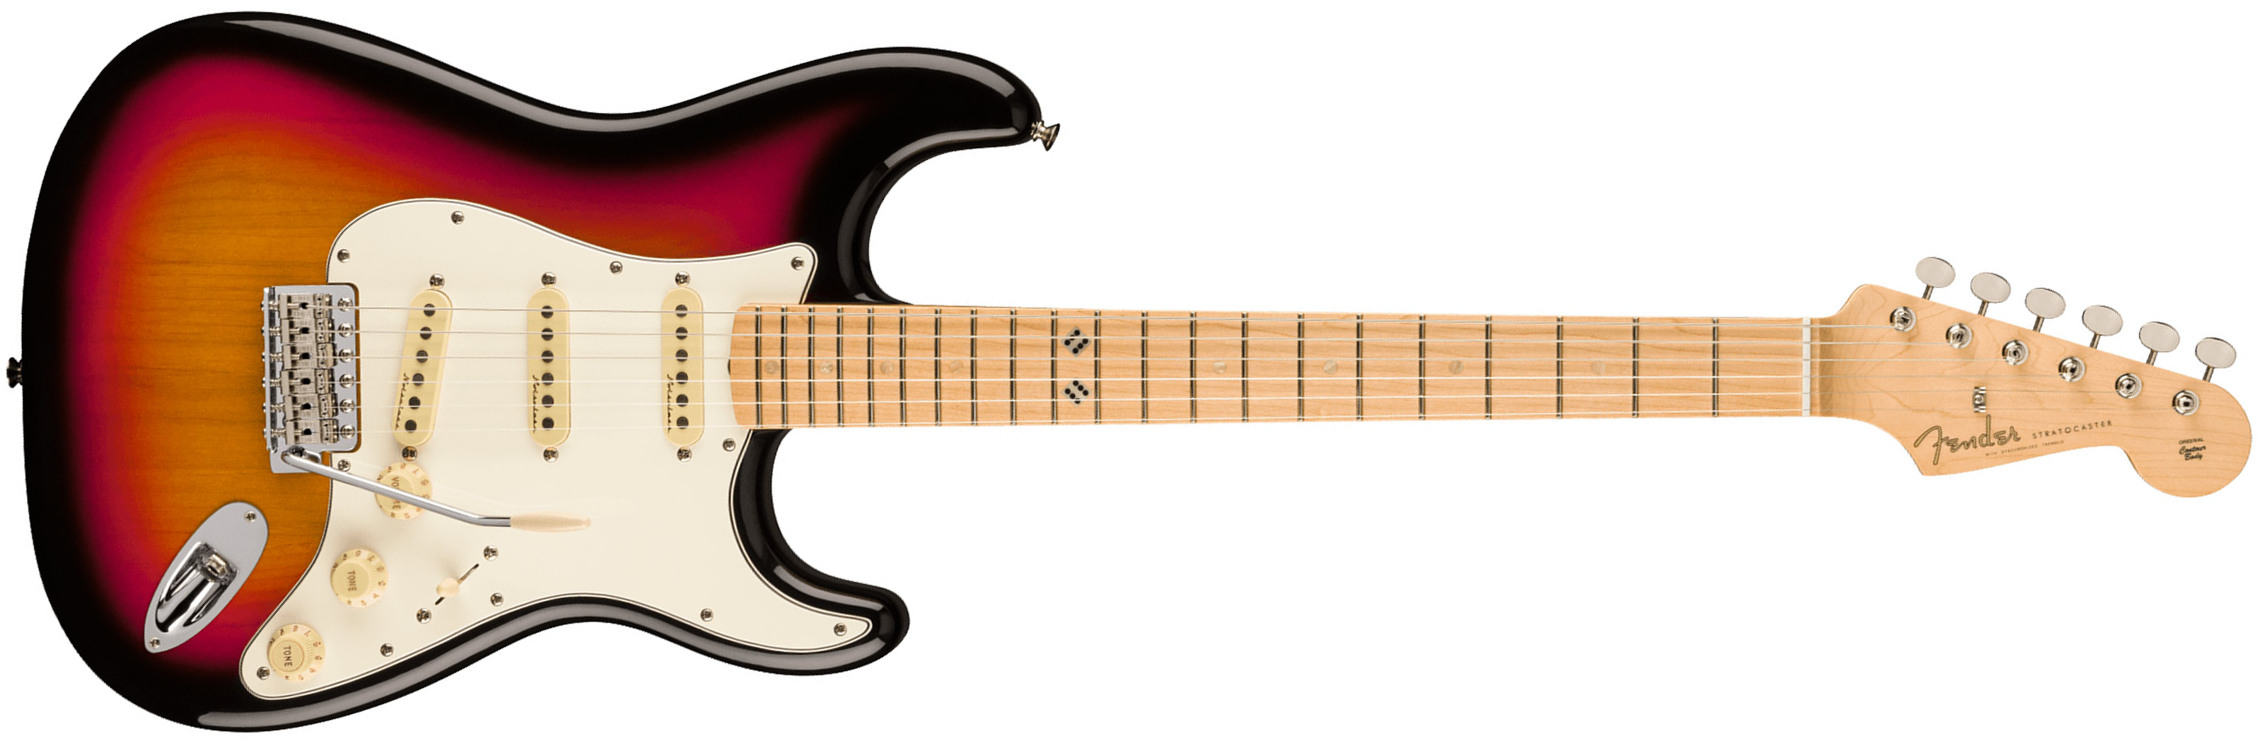 Fender Steve Lacy Strat People Pleaser Mex Signature 3s Trem Mn - Chaos Burst - Elektrische gitaar in Str-vorm - Main picture